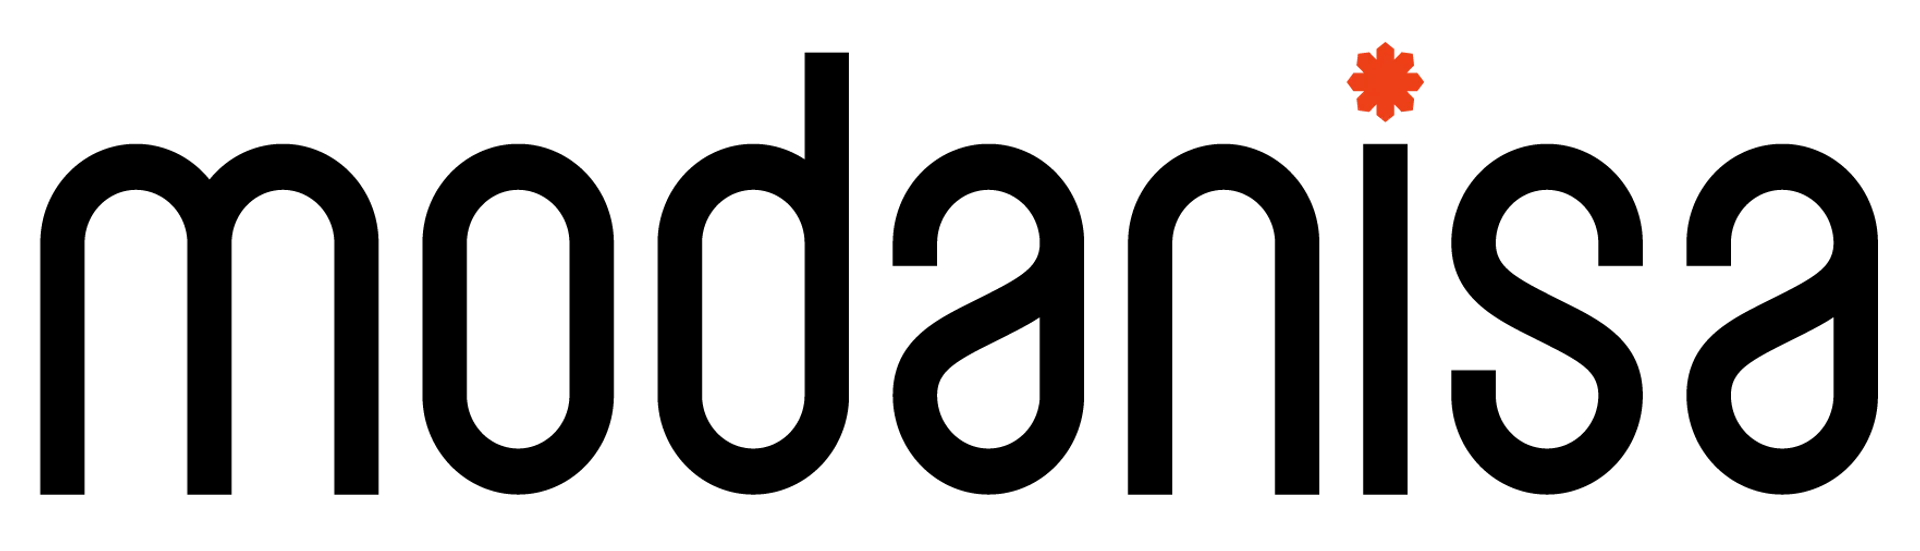 MODANISA logo. Current weekly ad